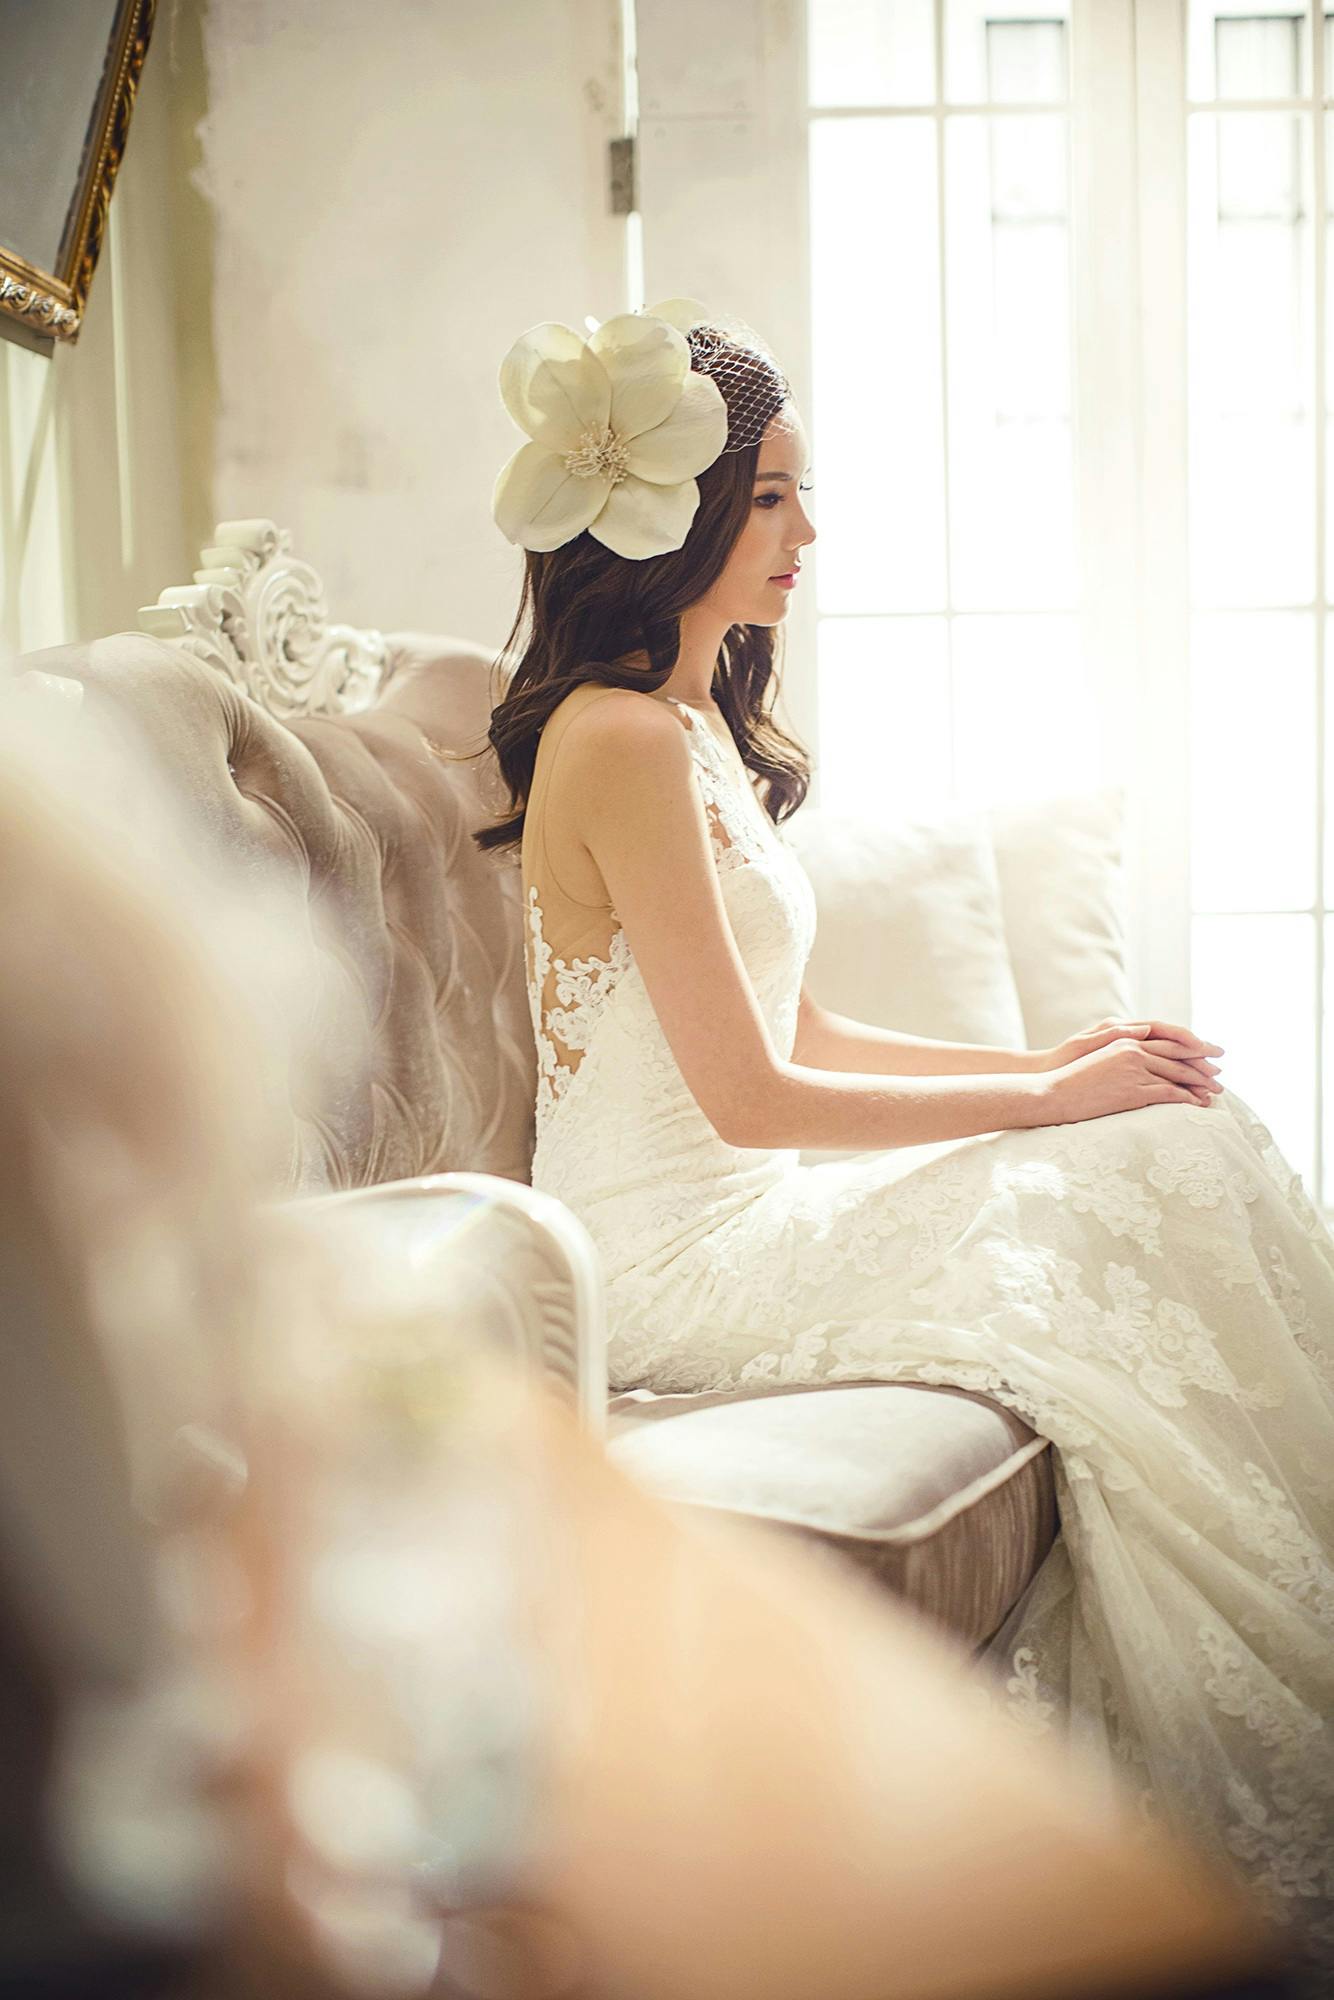 https://images.pexels.com/photos/157904/wedding-dresses-fashion-character-bride-157904.jpeg